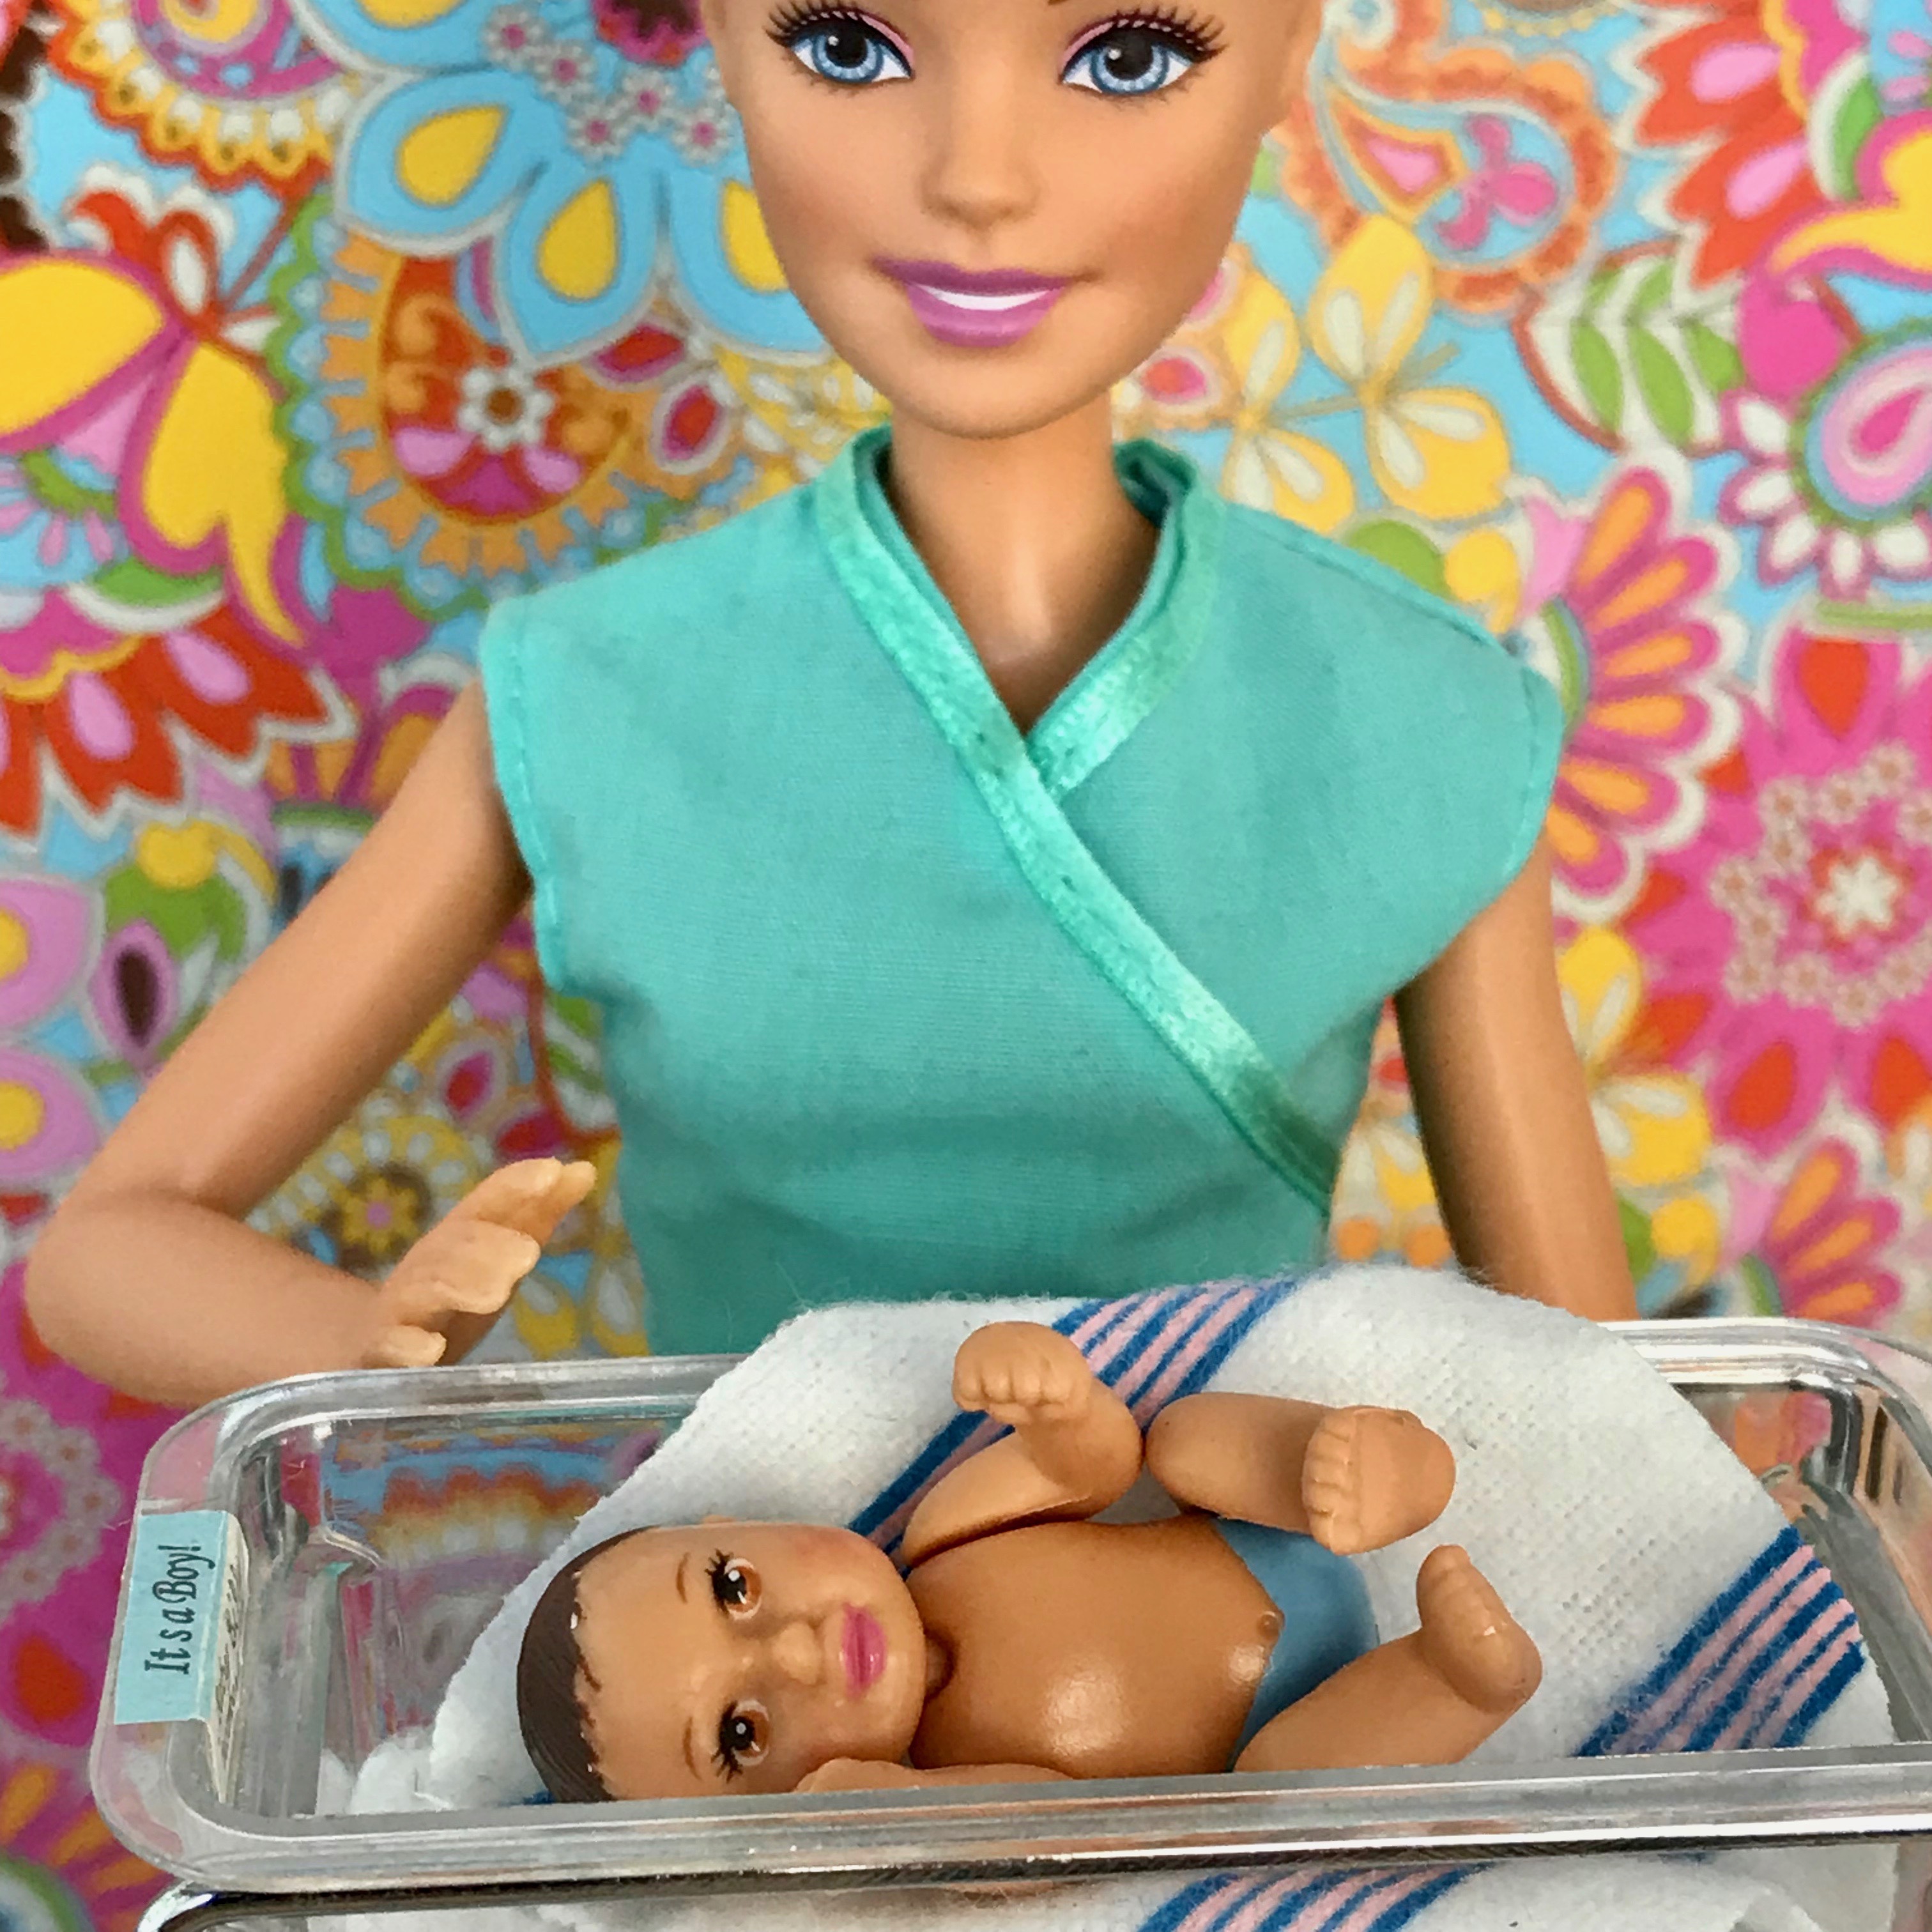 barbie new born